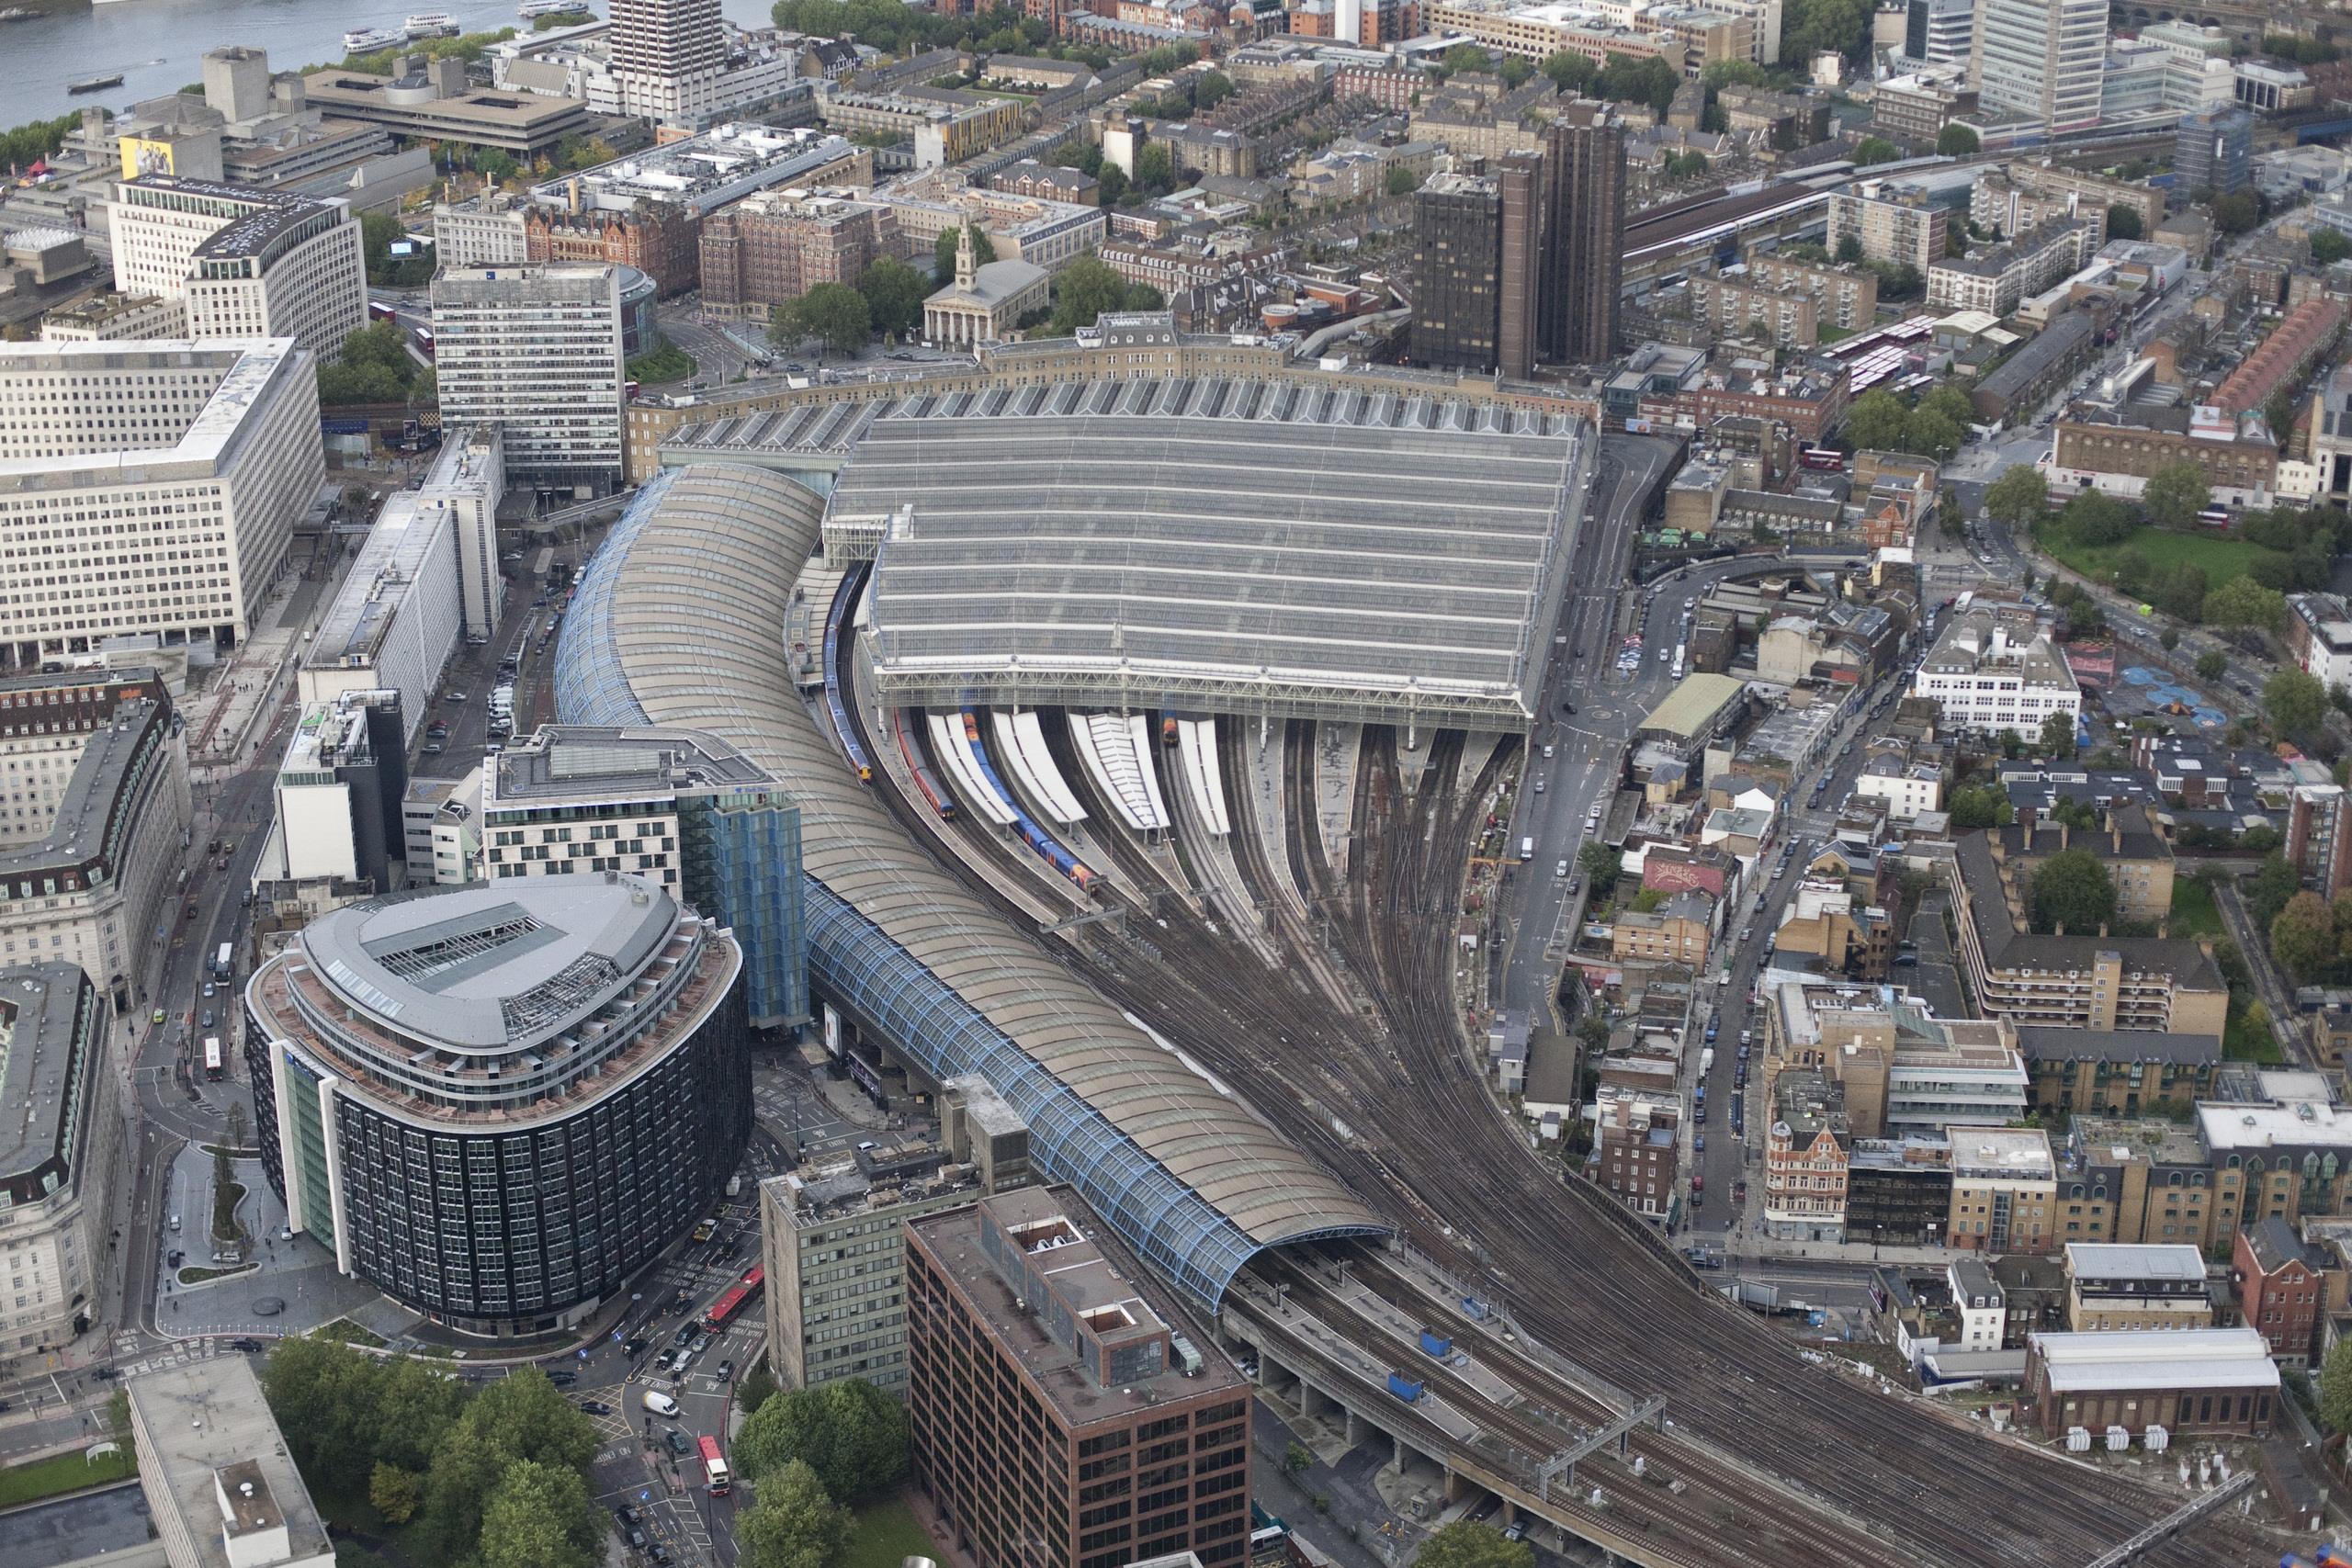 Aerial view of London Waterloo Station